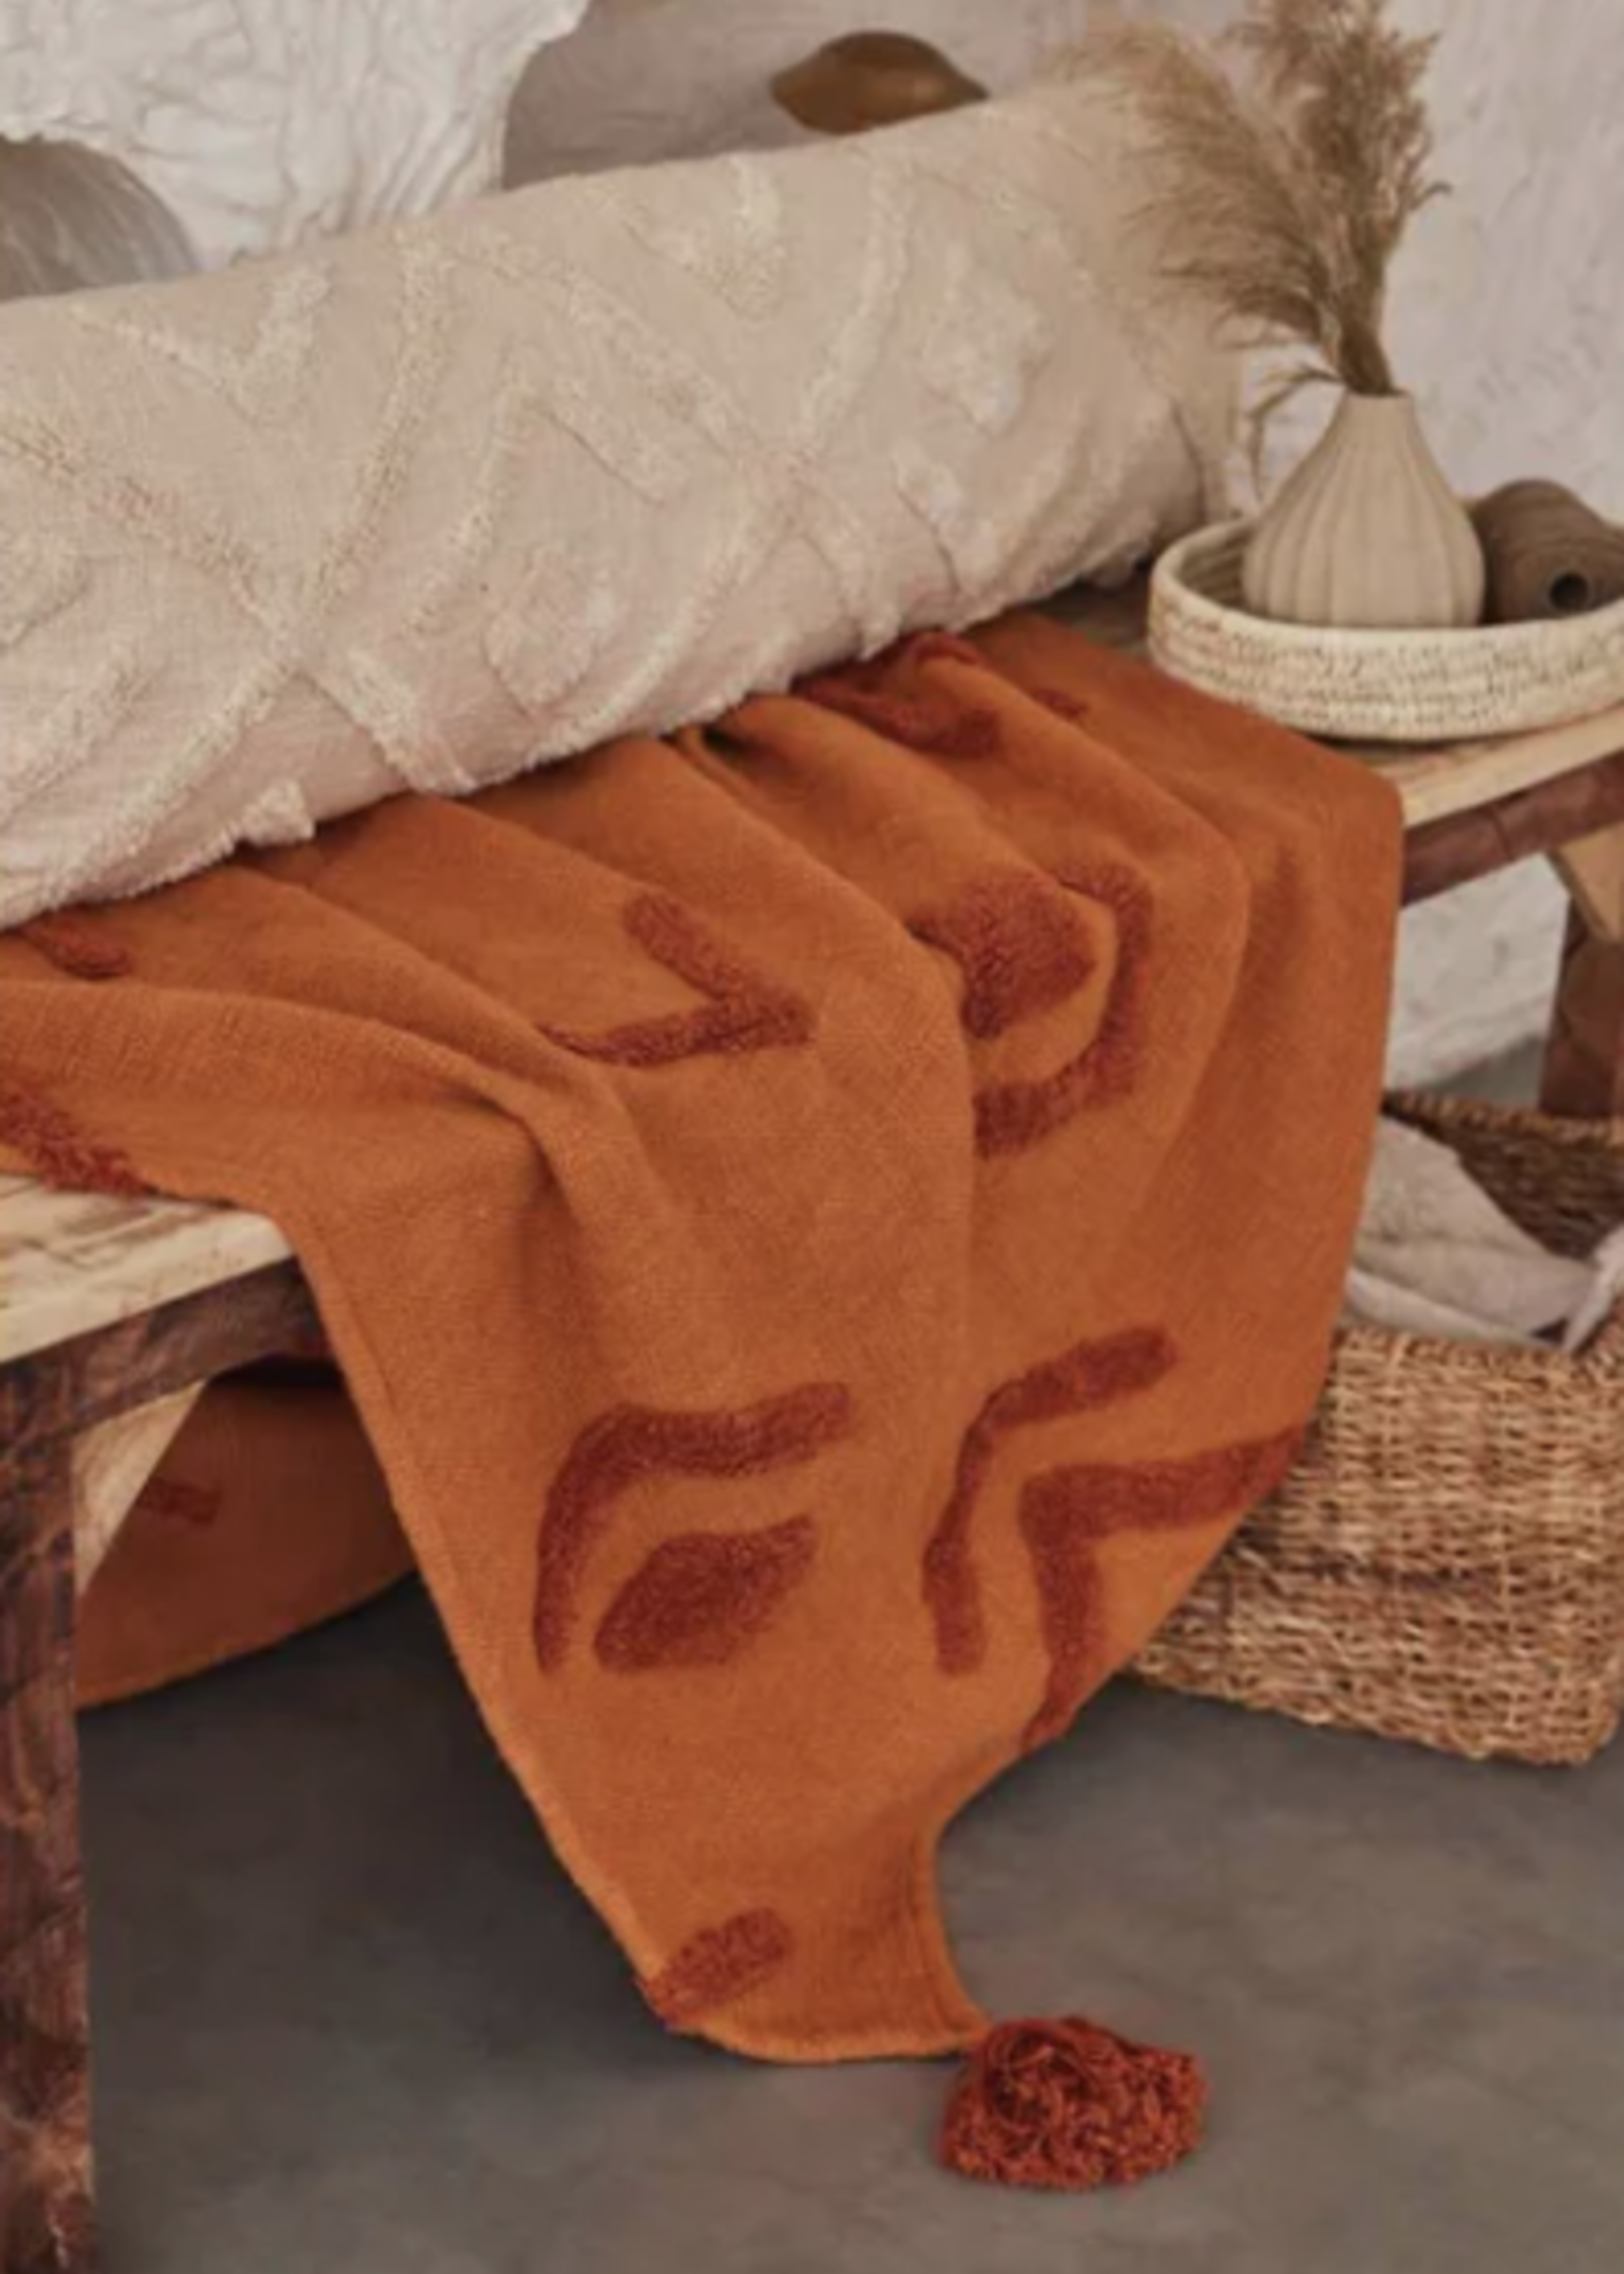 Handmade Boho Throw Blanket, Rust - 50x60